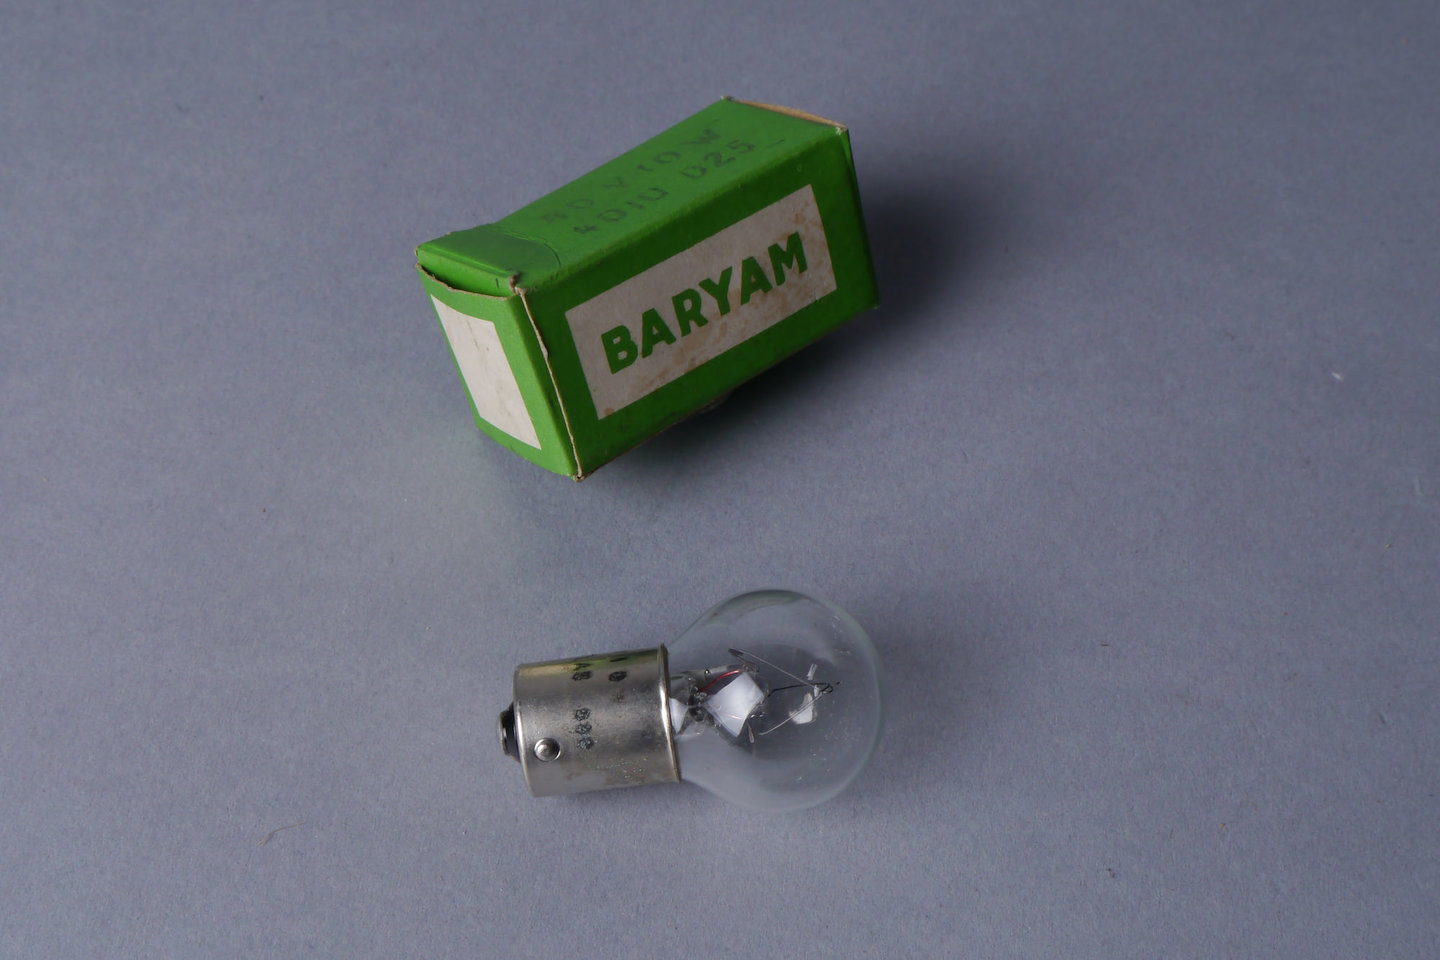 Autolamp van het merk Baryam